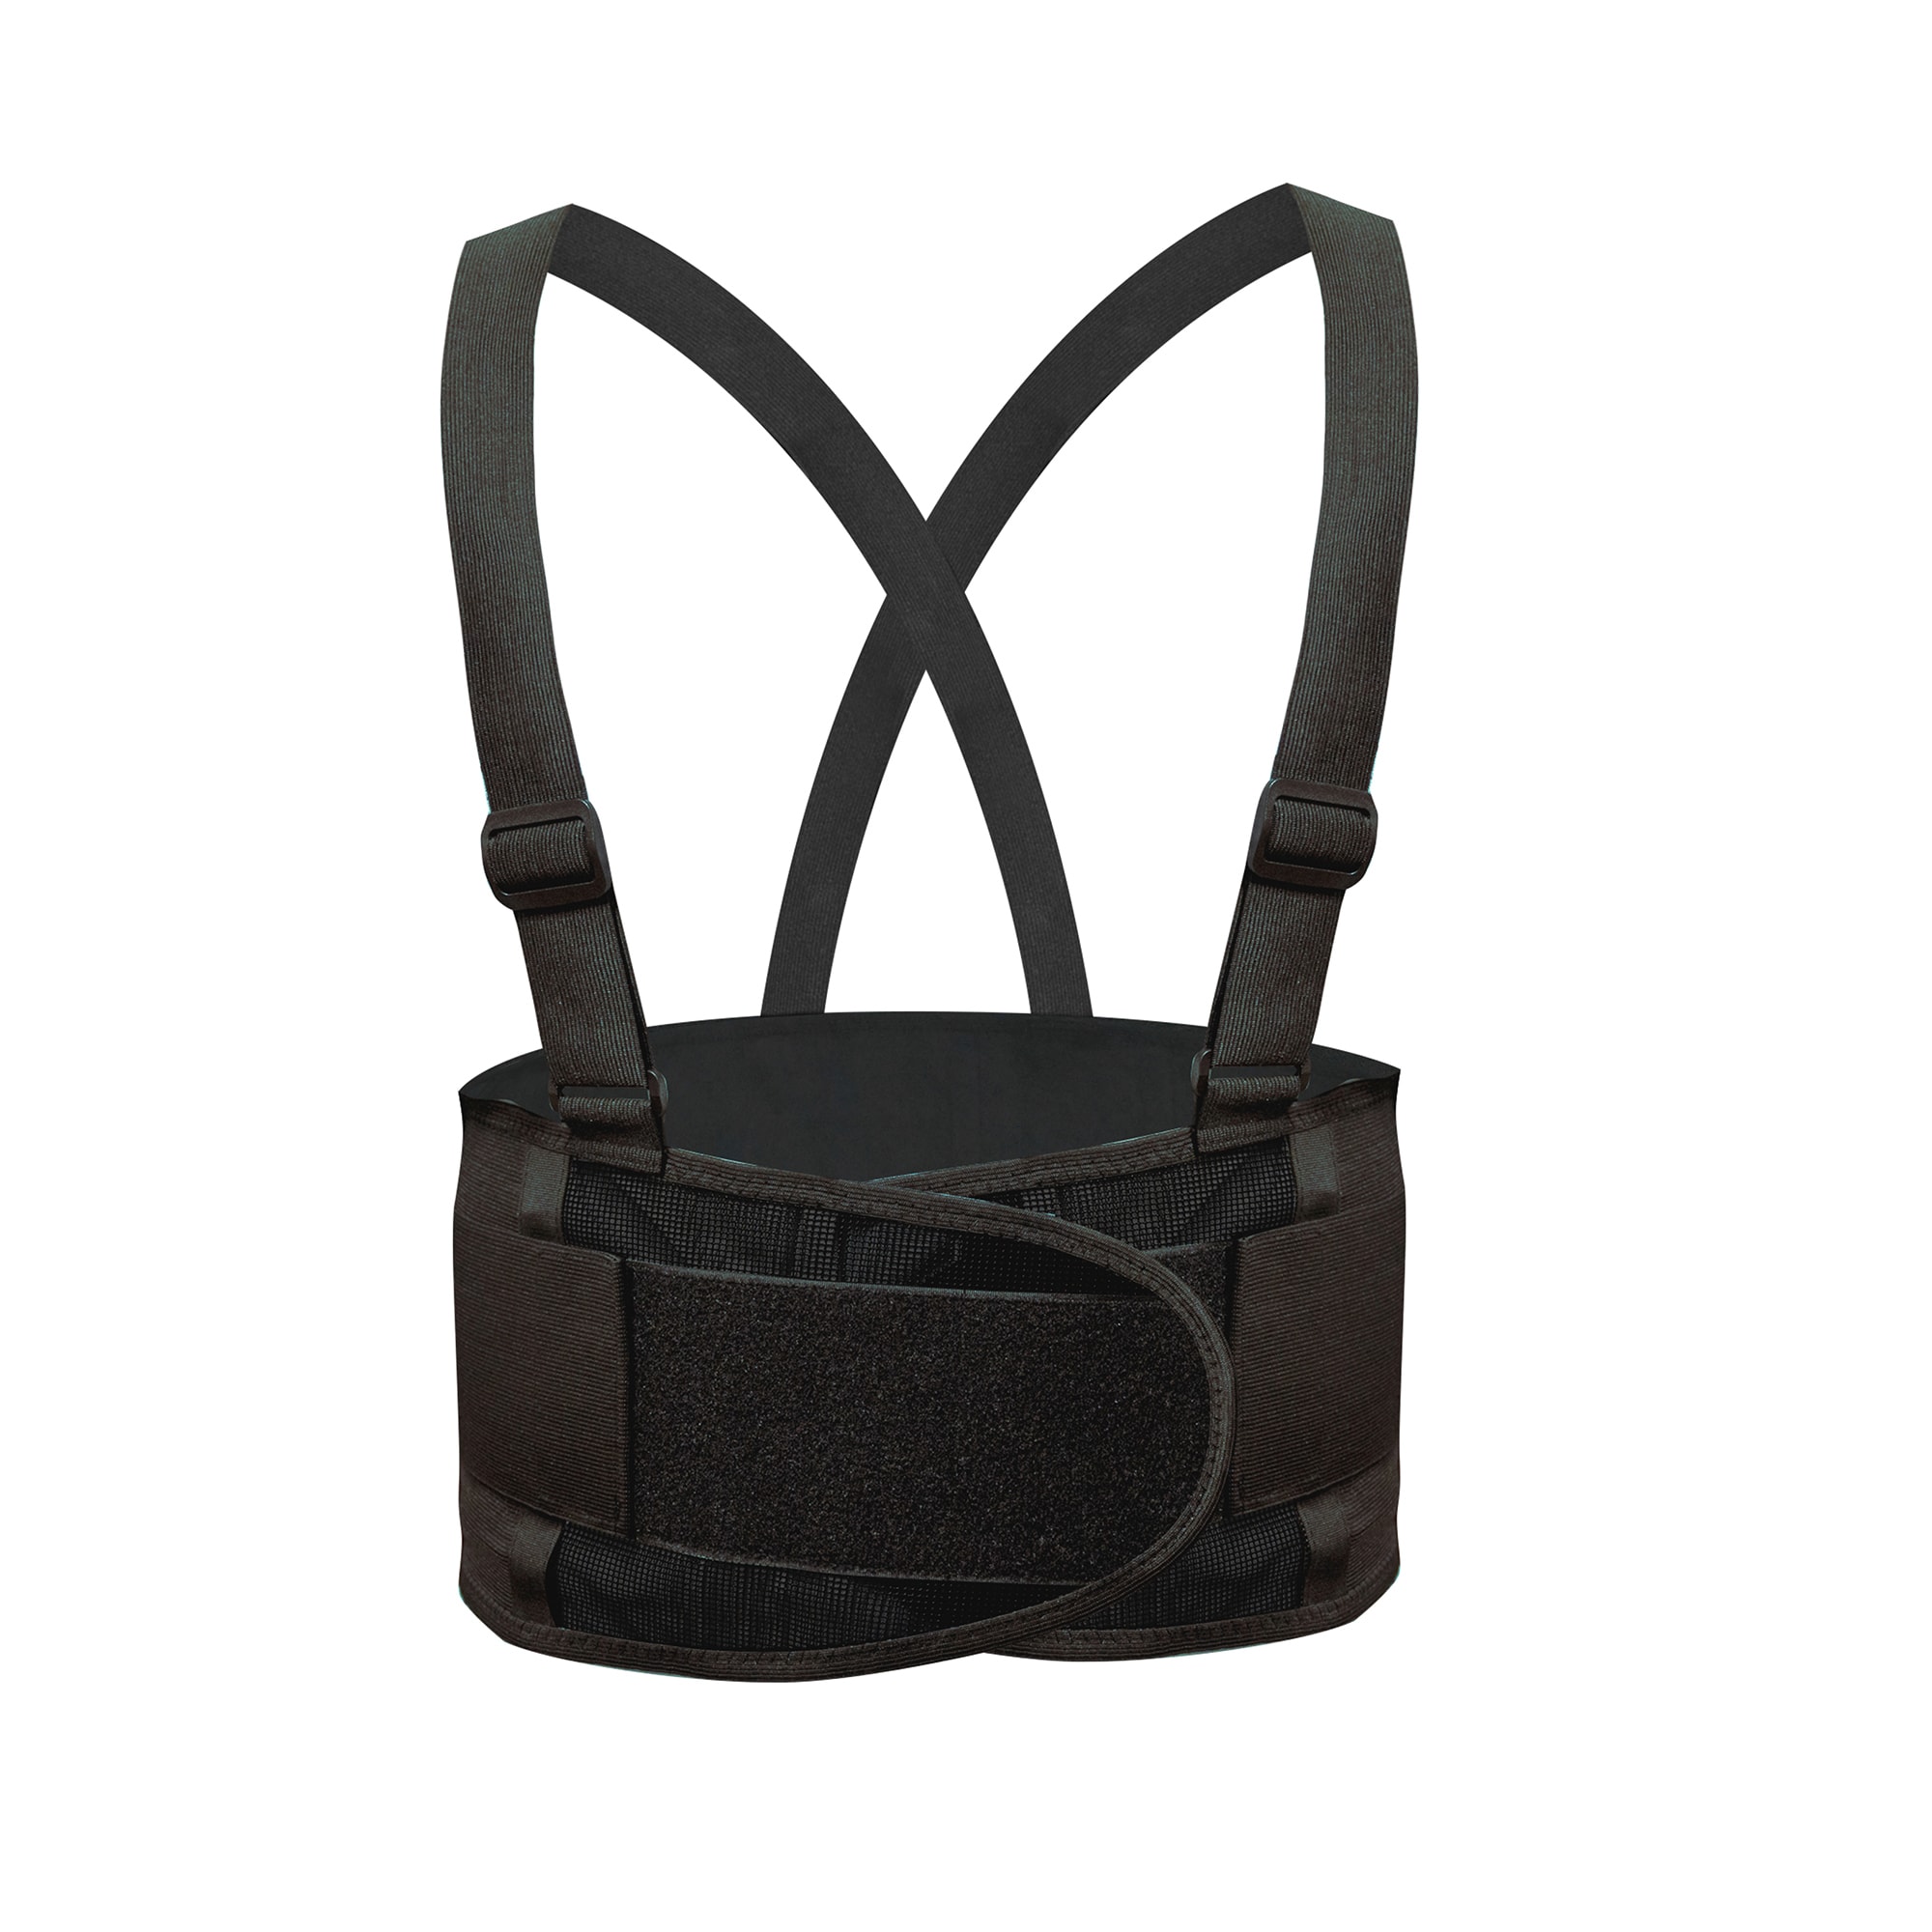 Safe Handler Lifting Support Weight Belt, Lower Back Brace, Dual